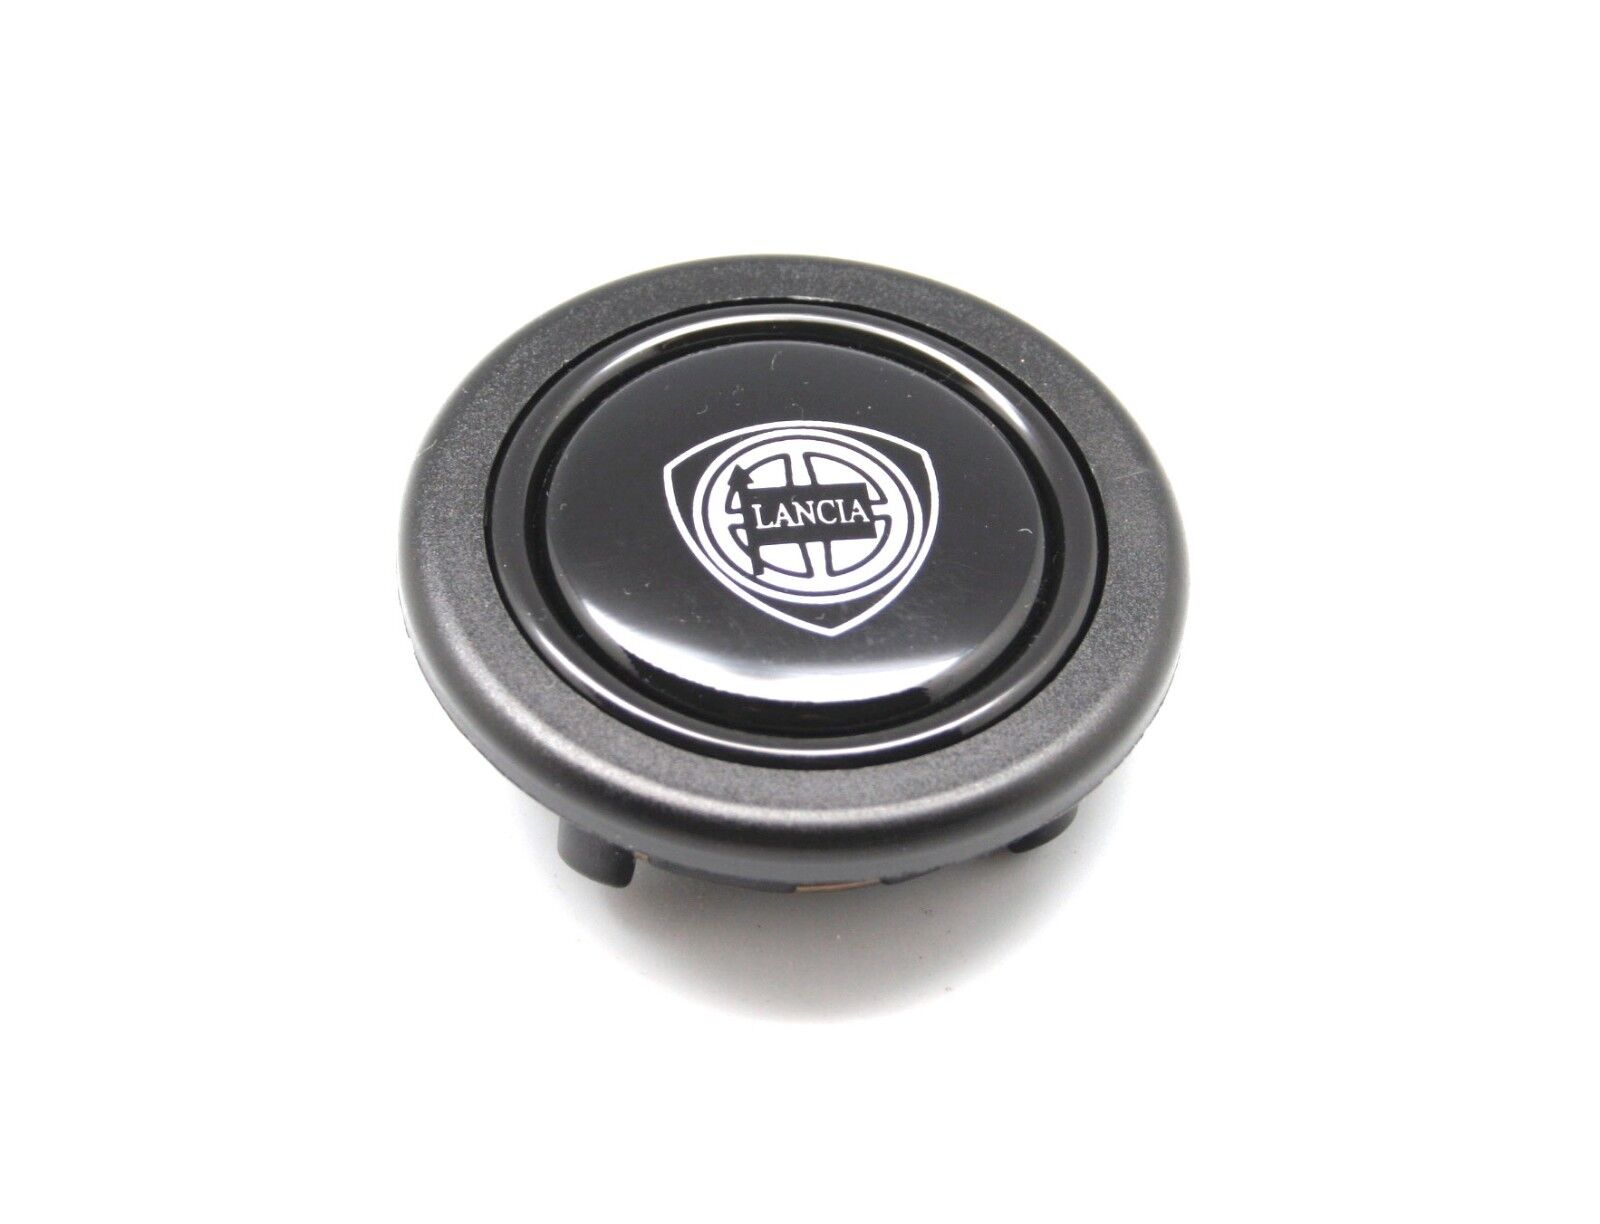 ELETTRO Steering Wheel Horn Button for MOMO OMP With Lancia Logo Emblem